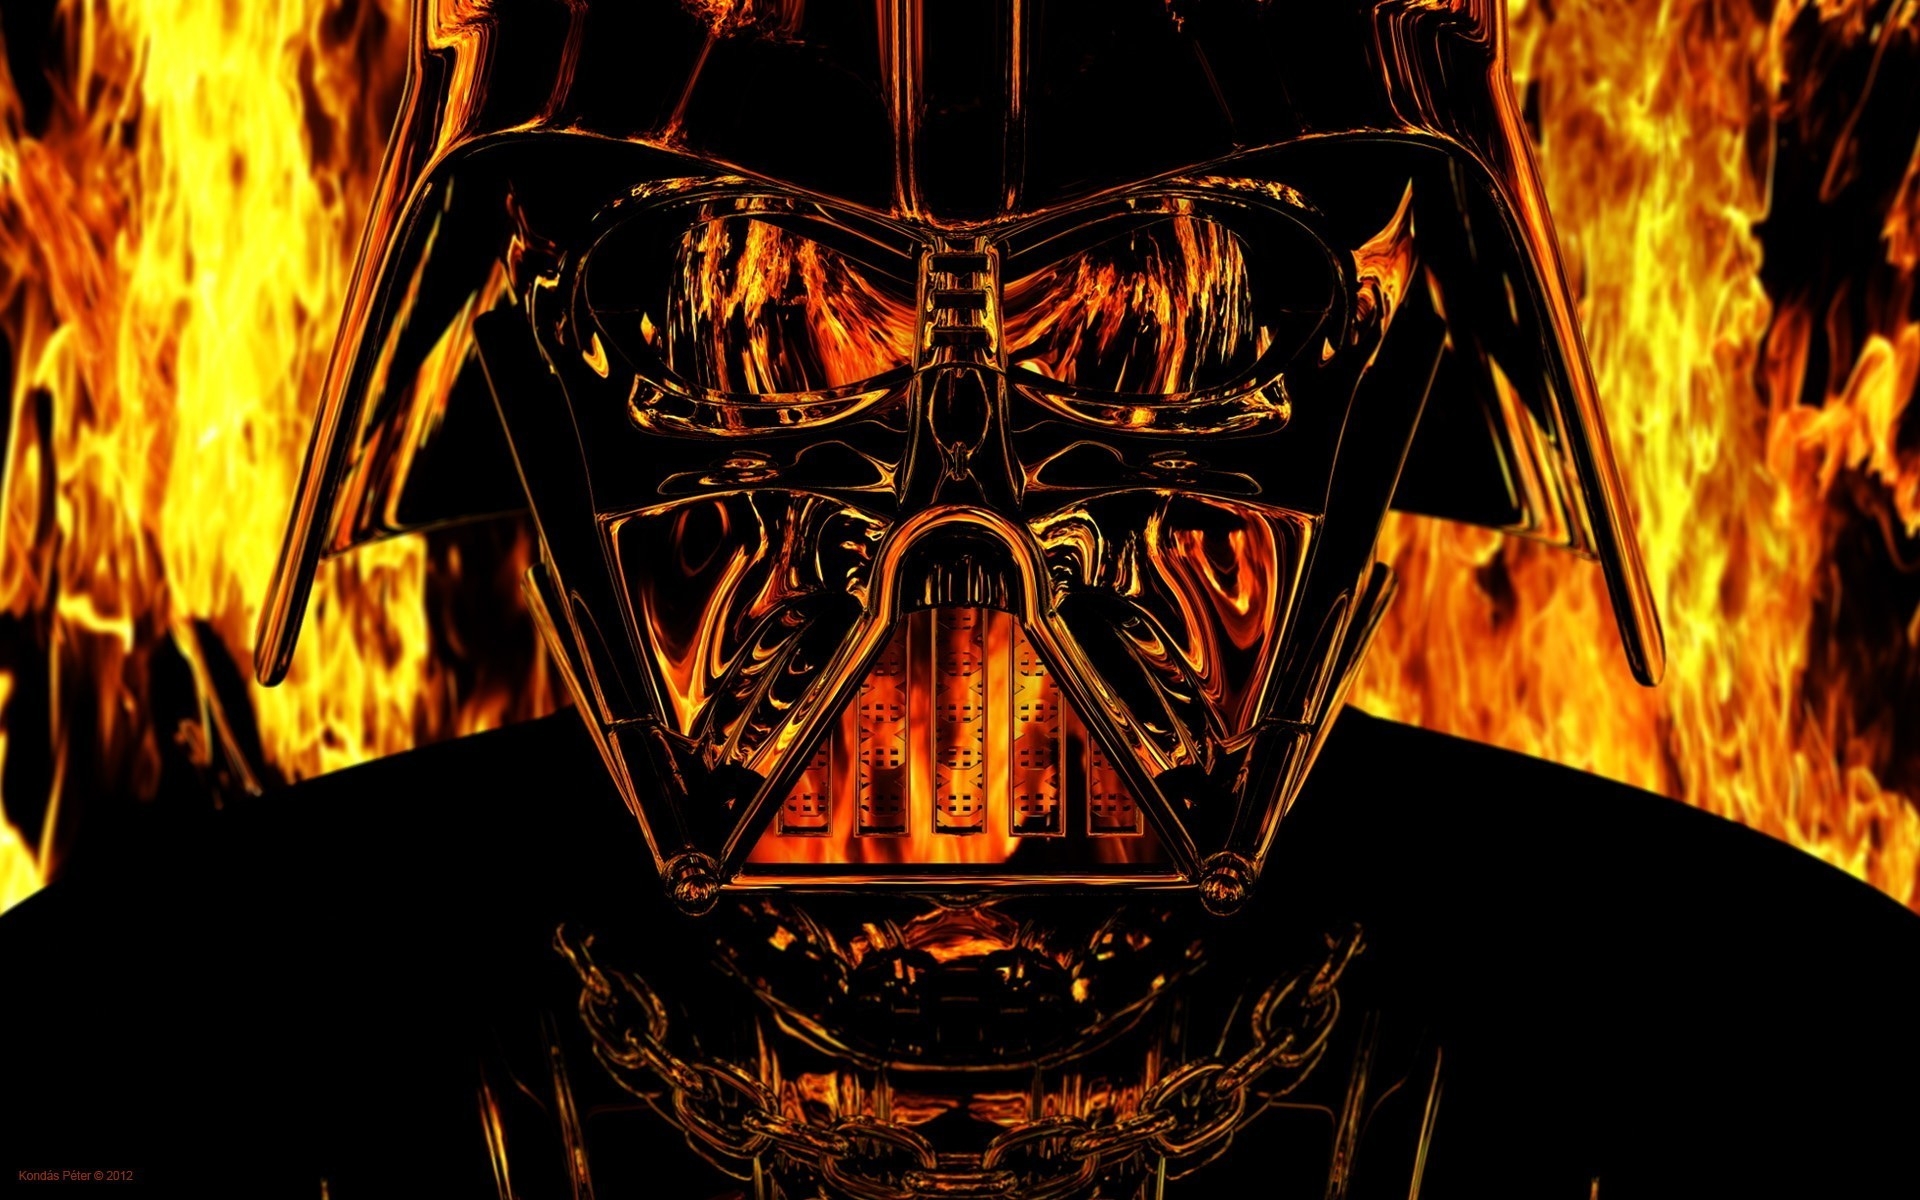 Darth Vader Star Wars for 1920 x 1200 widescreen resolution